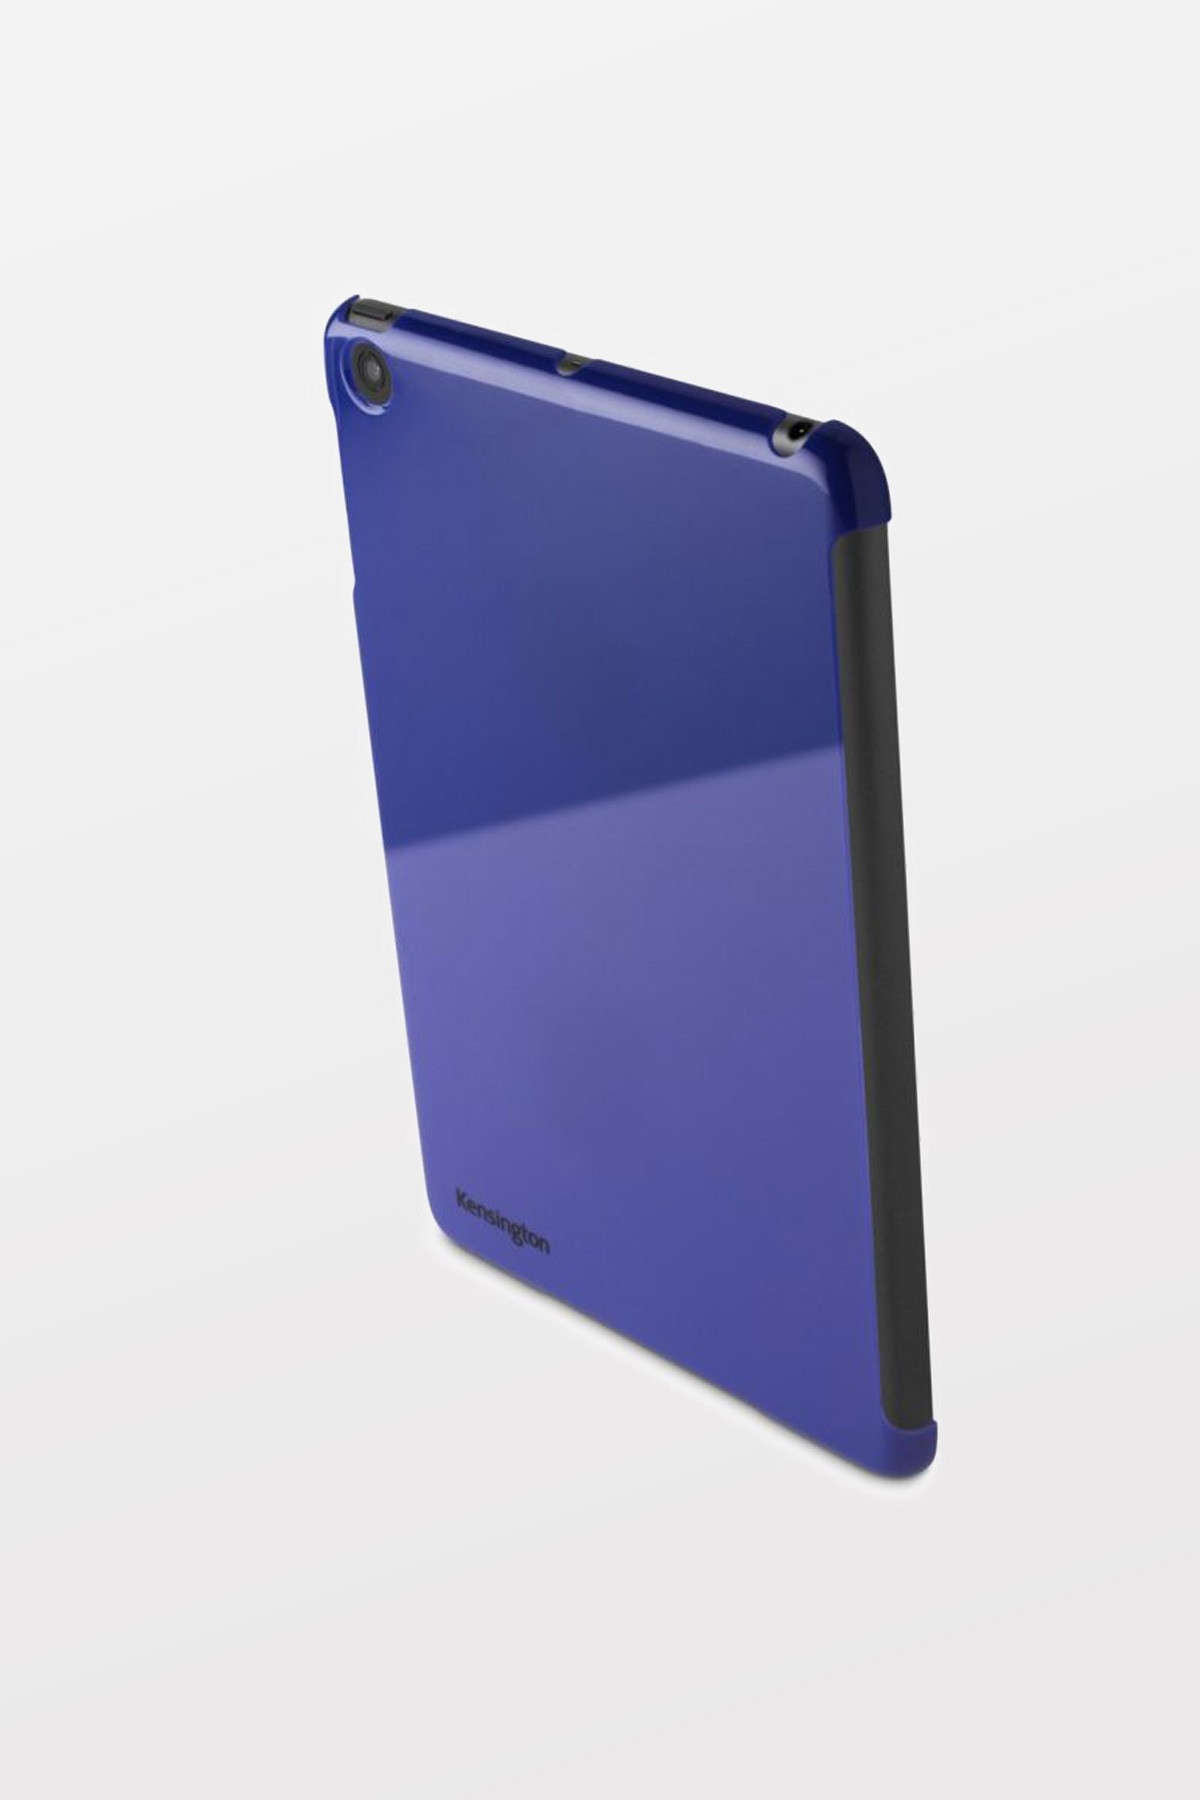 Kensington Back Cover for iPad Mini - Purple